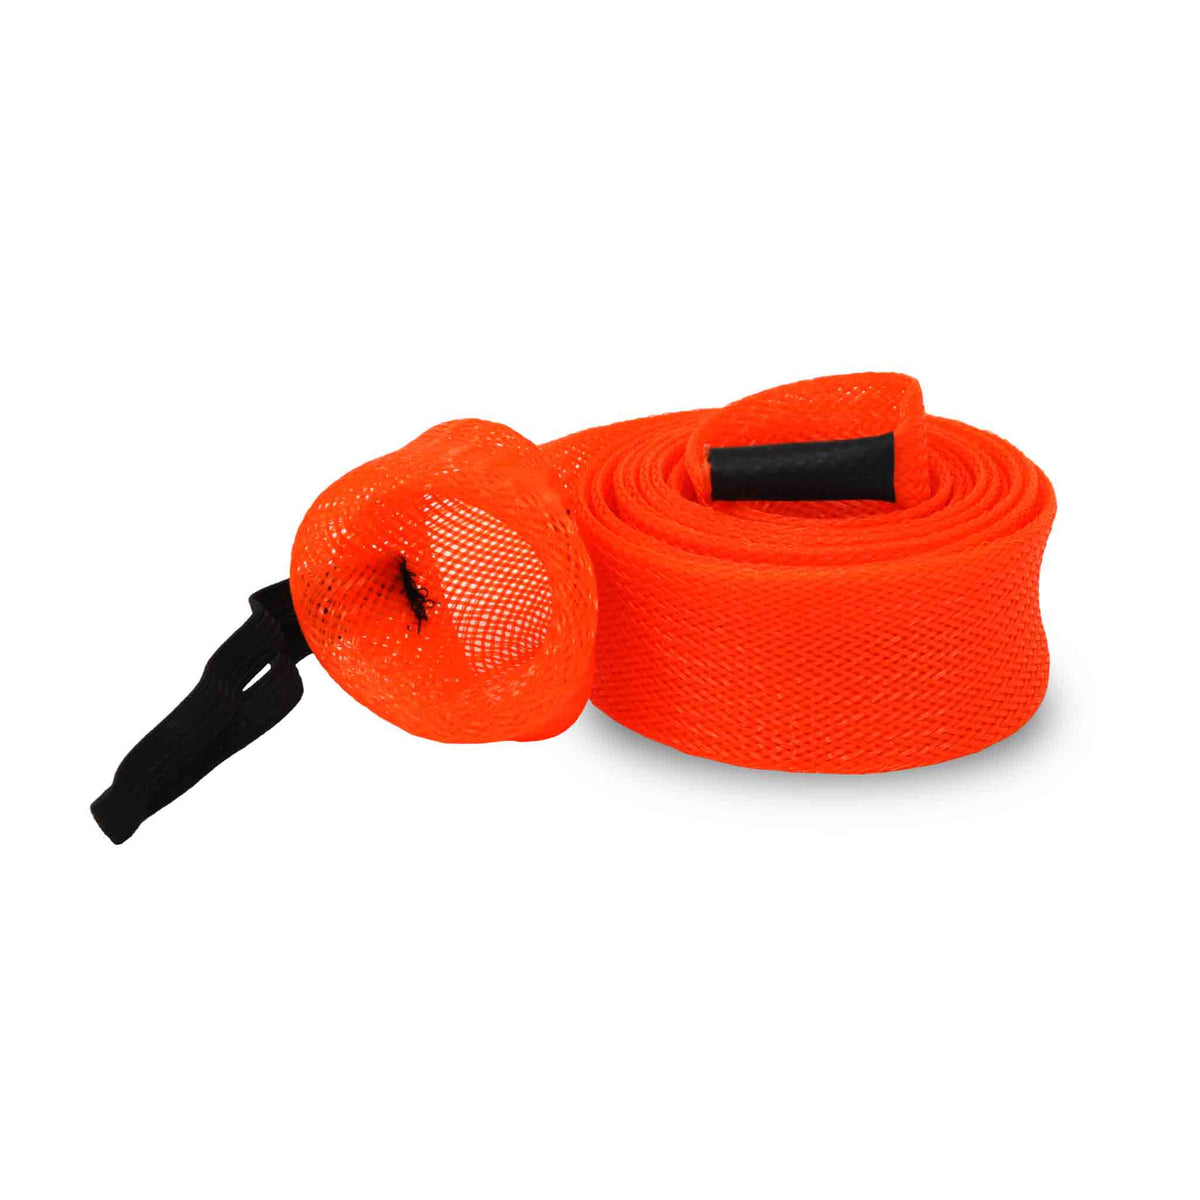 Ezoko Rod Sleeve Baitcast & Fly Fishing 5'7" Orange Fluo Rods-Reels-Accessories